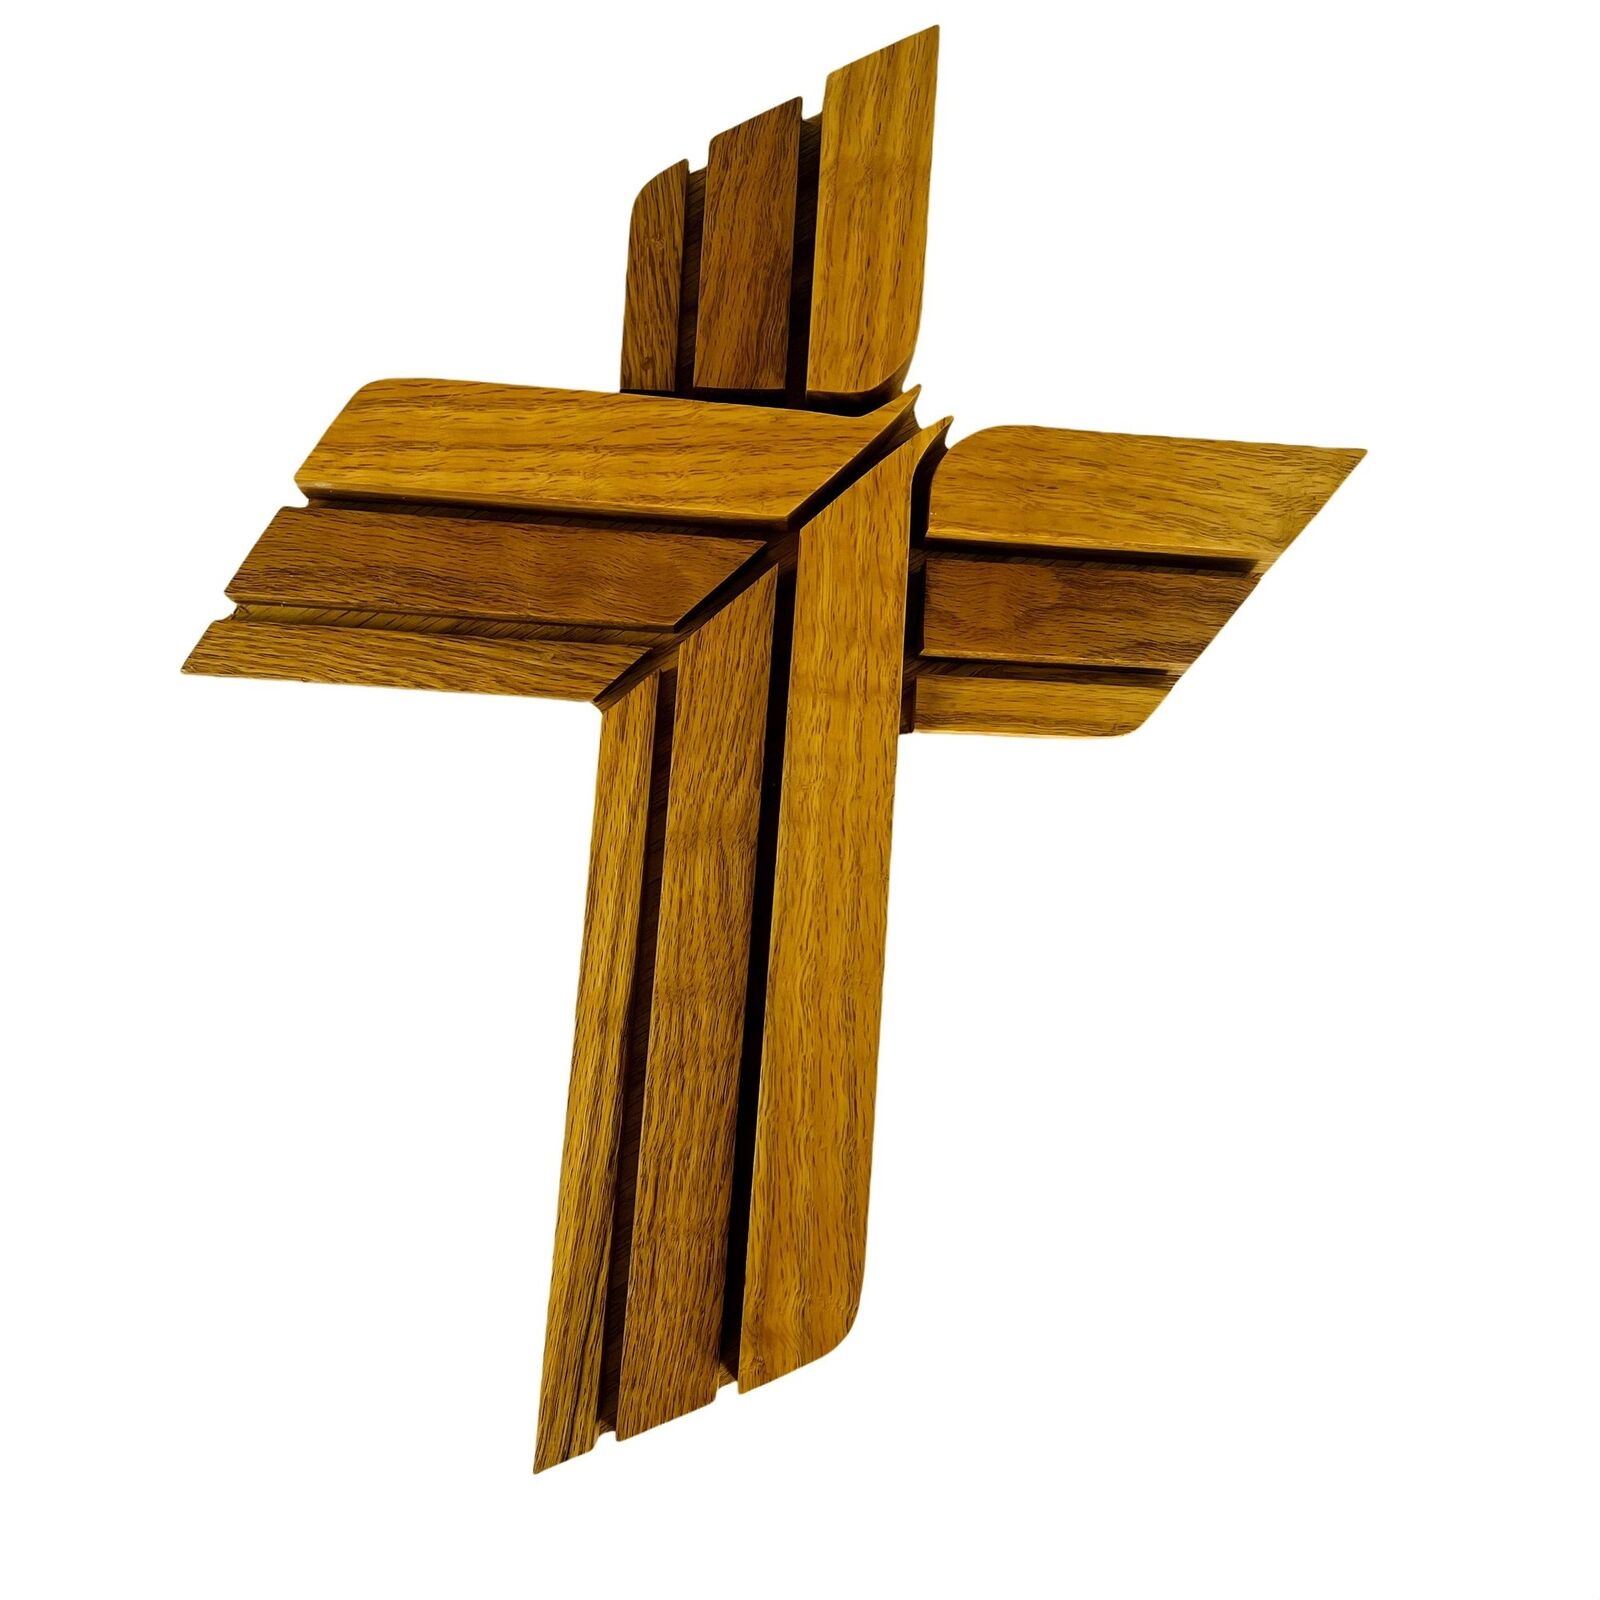 Handmade Wood Inlayed Cross Crucifix Large Mission Wall Hanging Large u